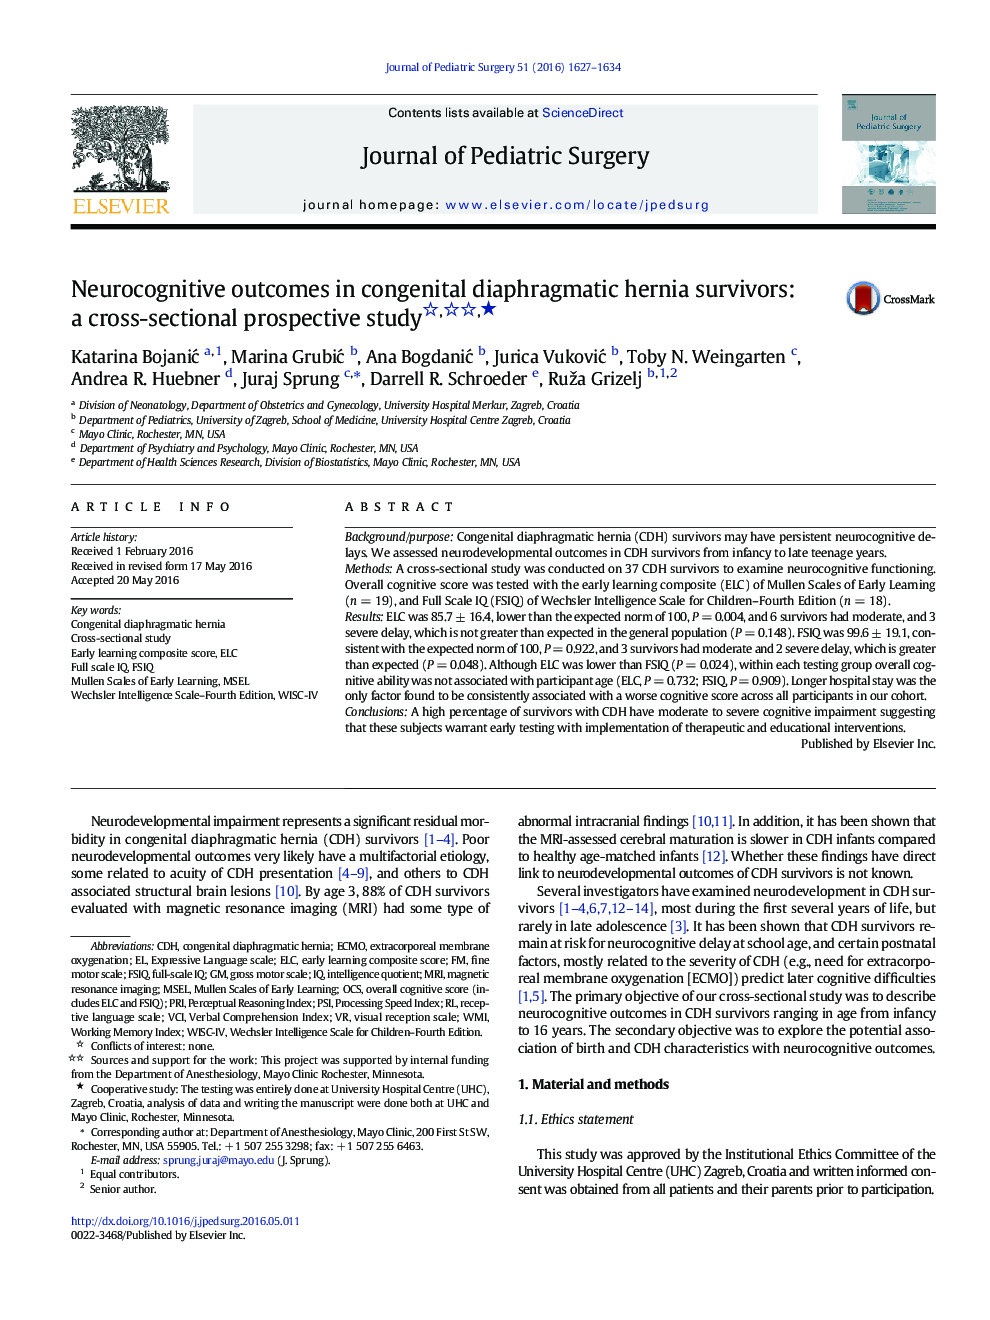 Neurocognitive outcomes in congenital diaphragmatic hernia survivors: a cross-sectional prospective study ★